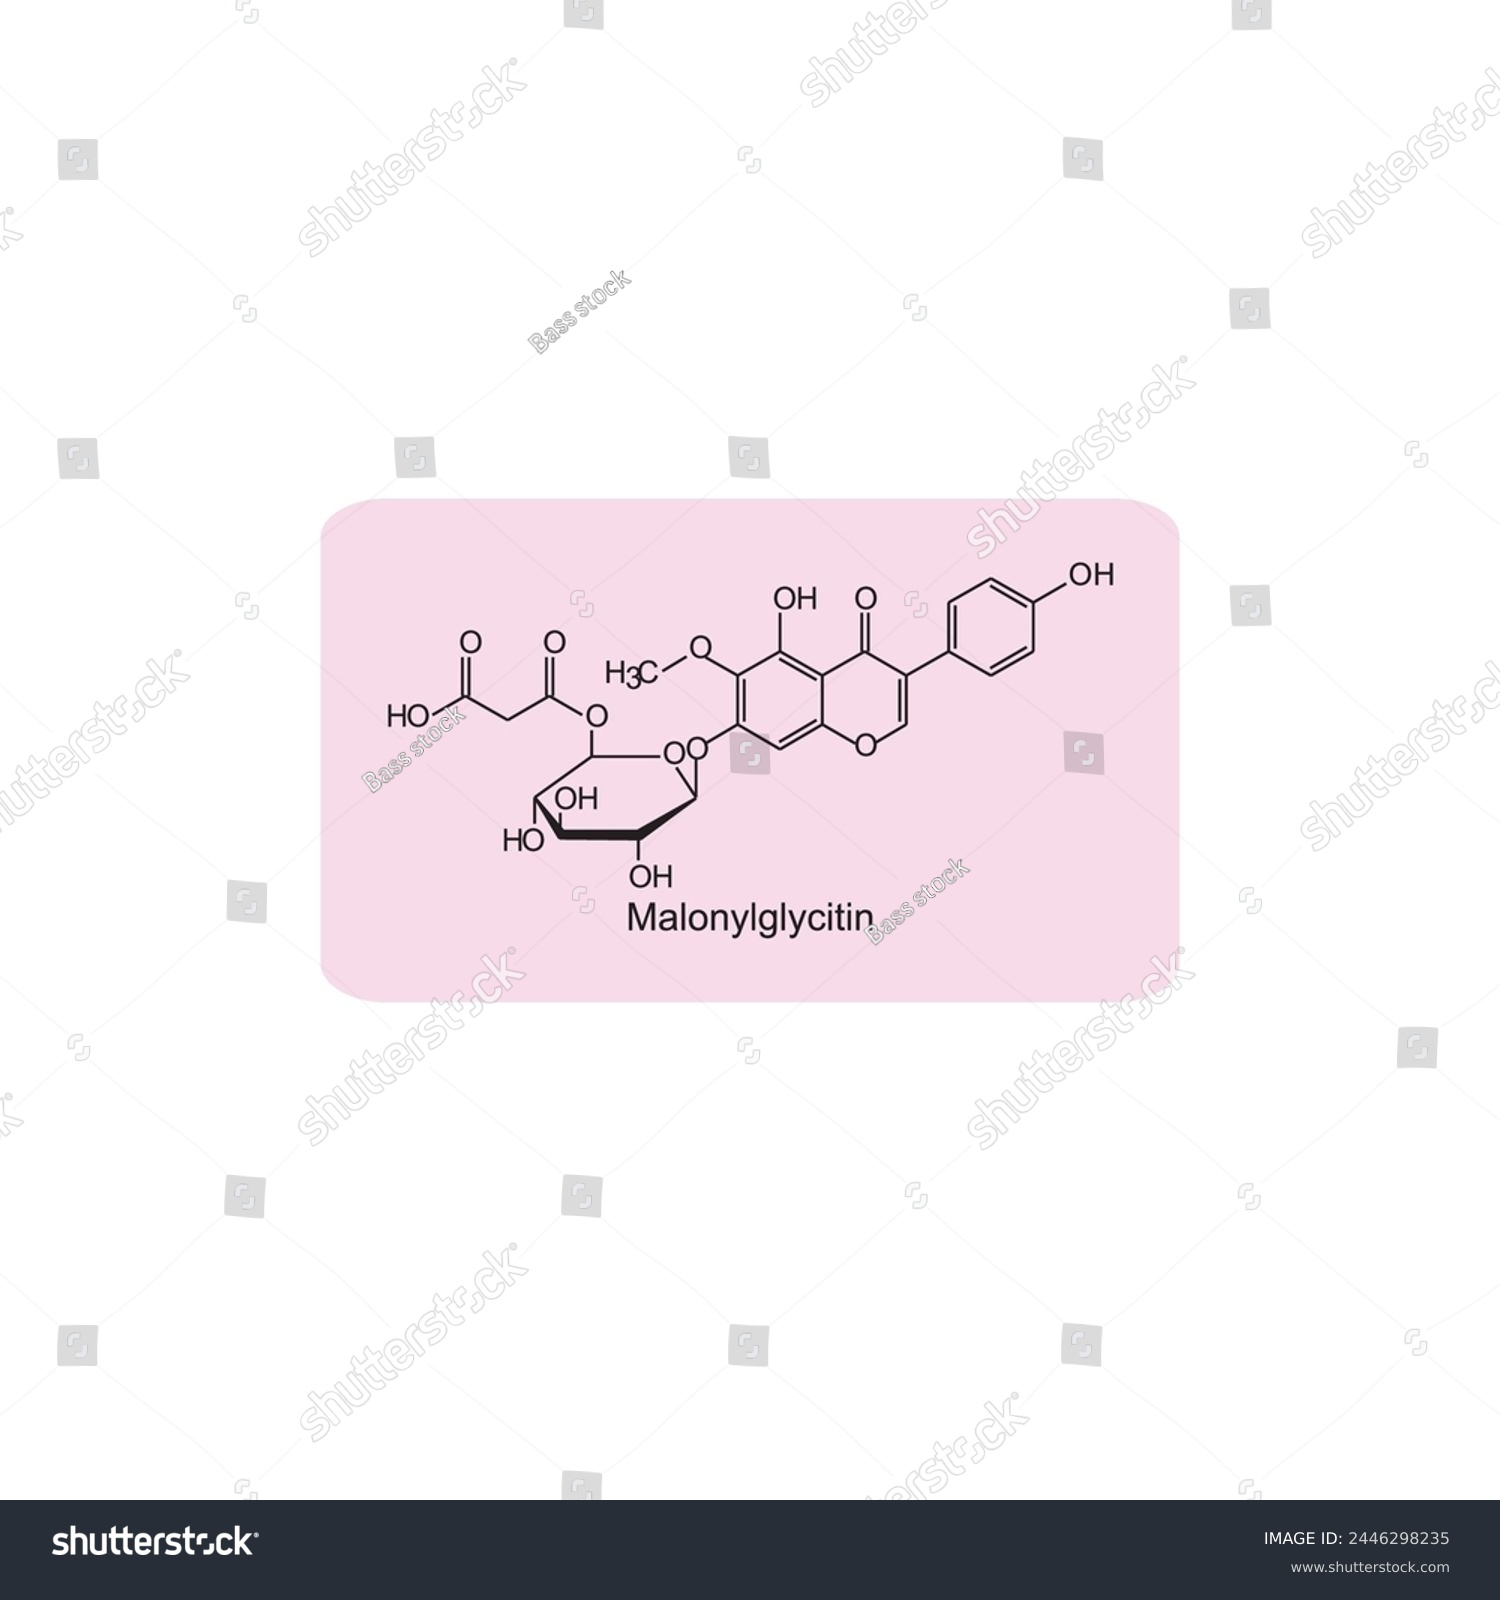 SVG of Malonylglycitin skeletal structure diagram. compound molecule scientific illustration on pink background. svg